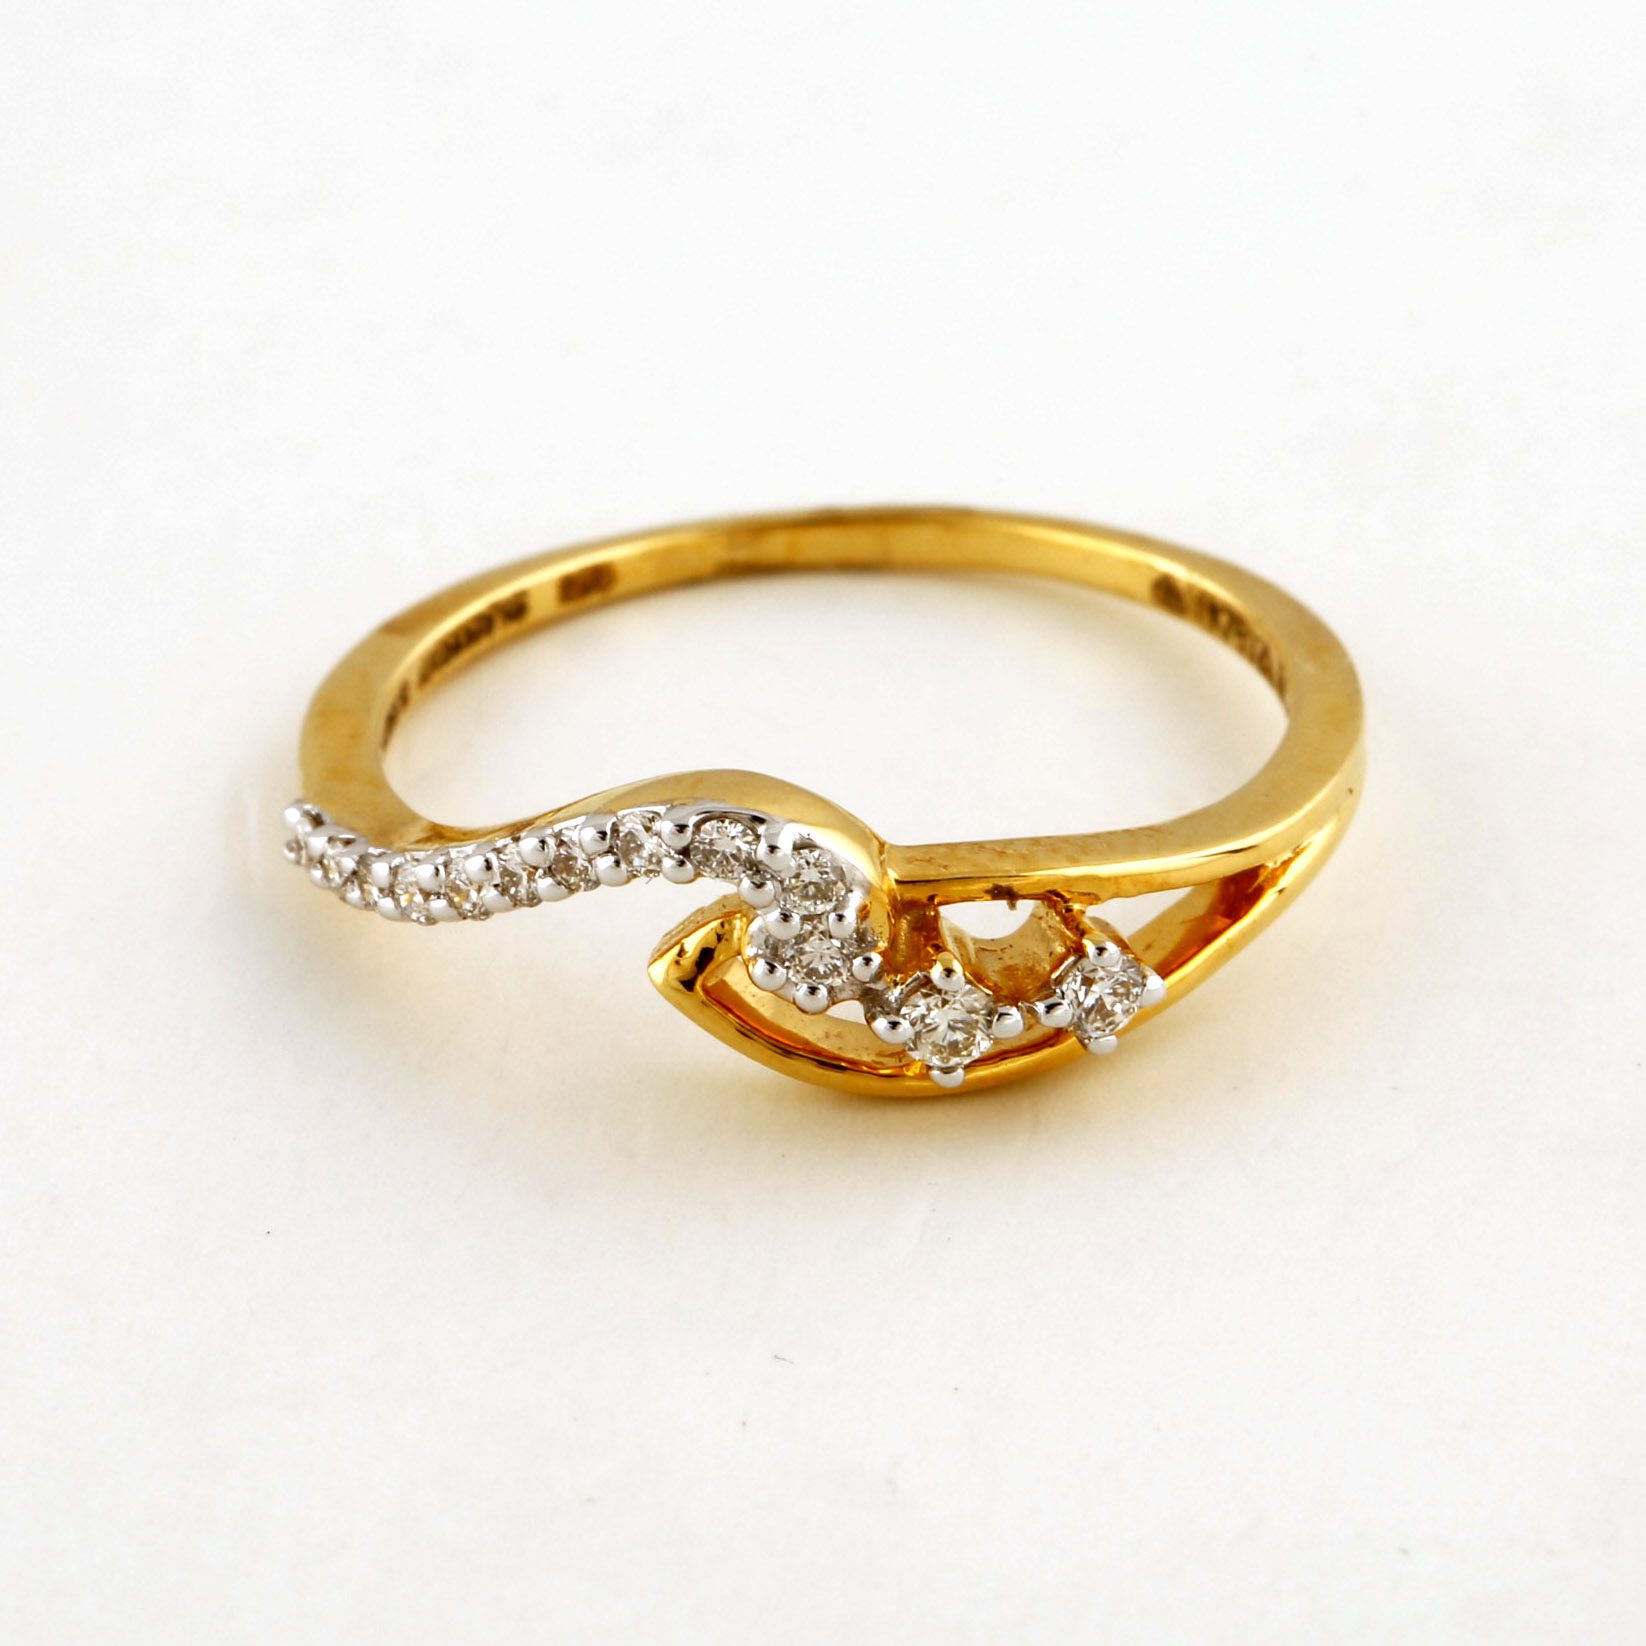 Red Ruby (Manik) Stone 22 karat Gold Designer Ring For ladies at best price  in Bhopal